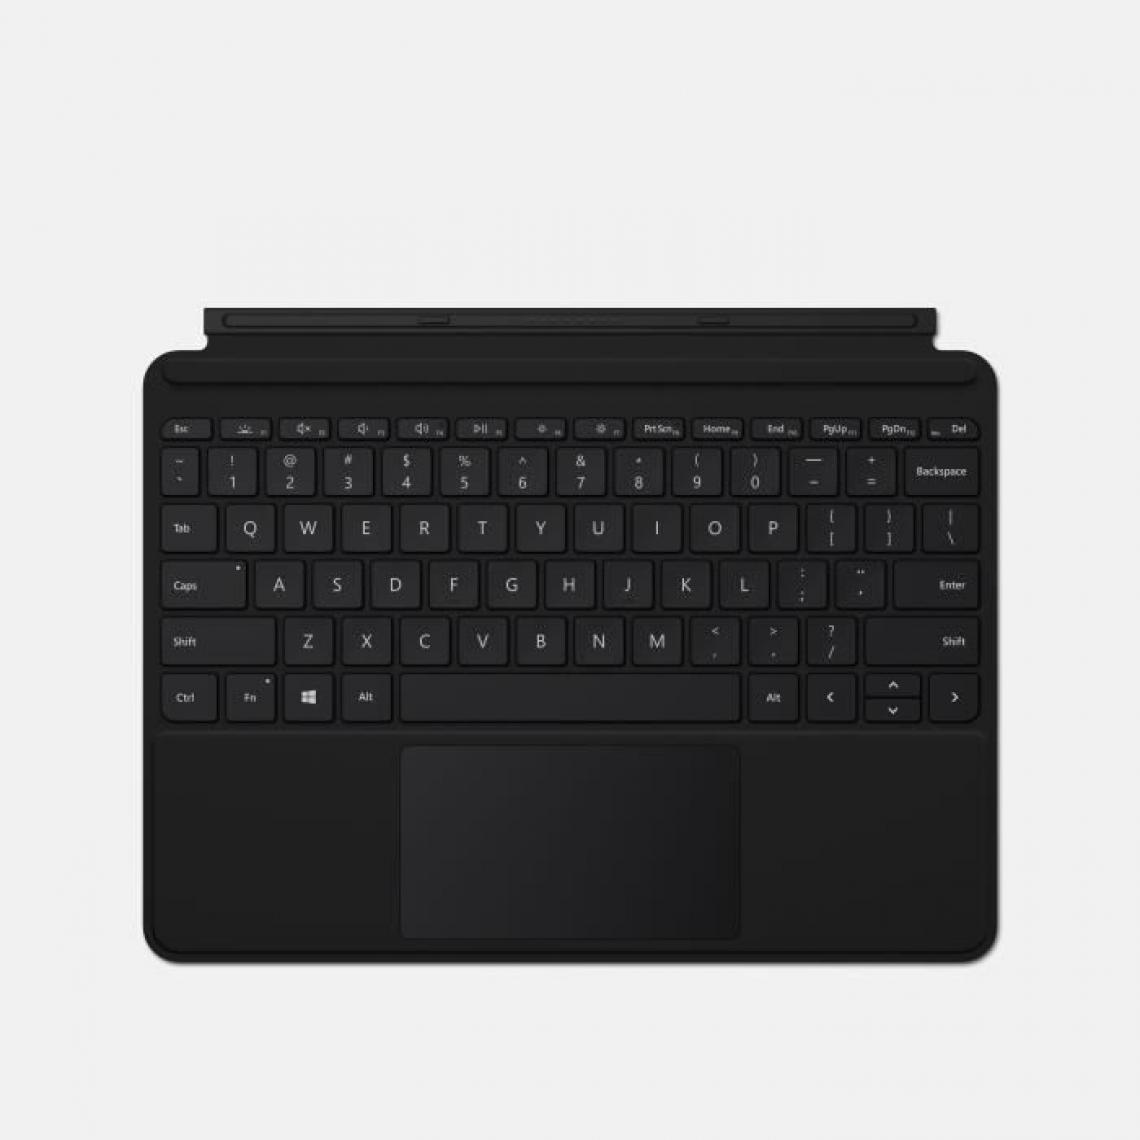 Microsoft - Etui avec clavier bluetooth KCM-00028 - Clavier